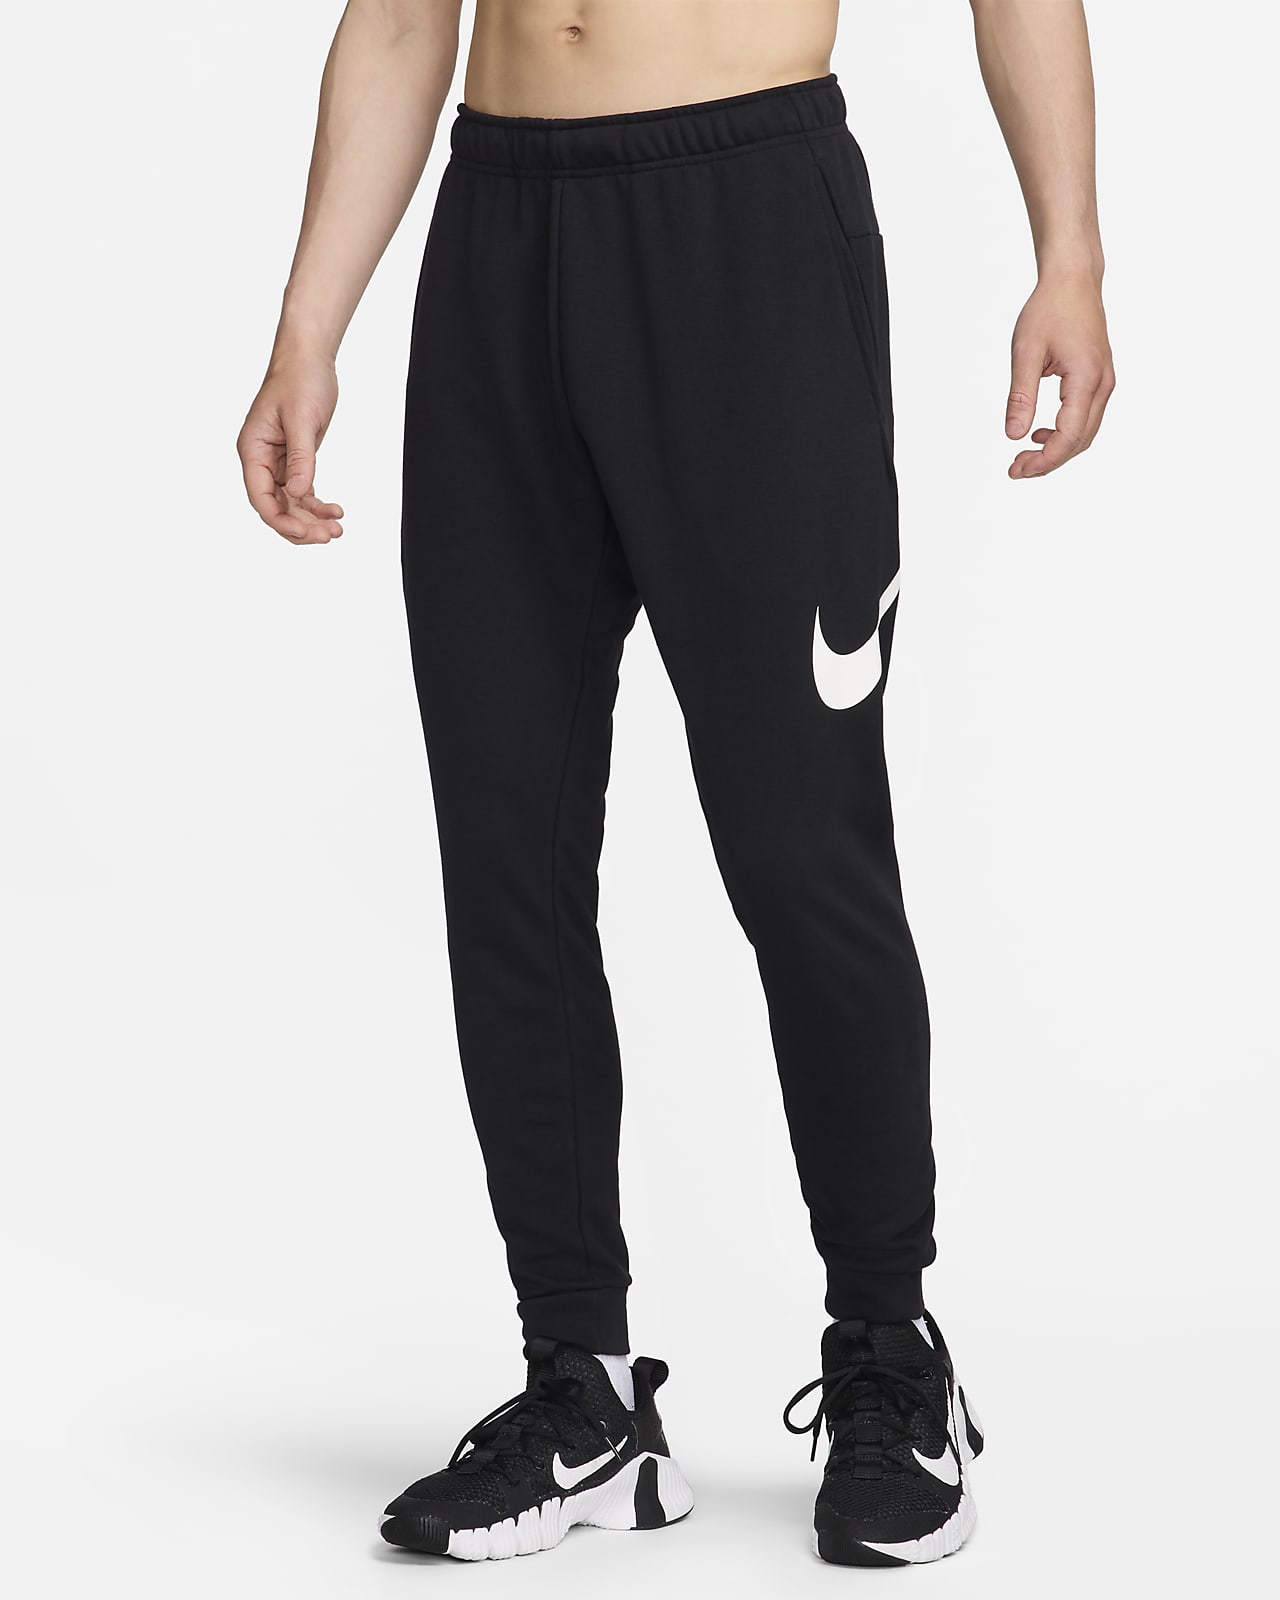 Men Skinny Sweatpants Fit Sports Trousers Bottoms Slim Gym Workout Joggers  Pants - Walmart.com